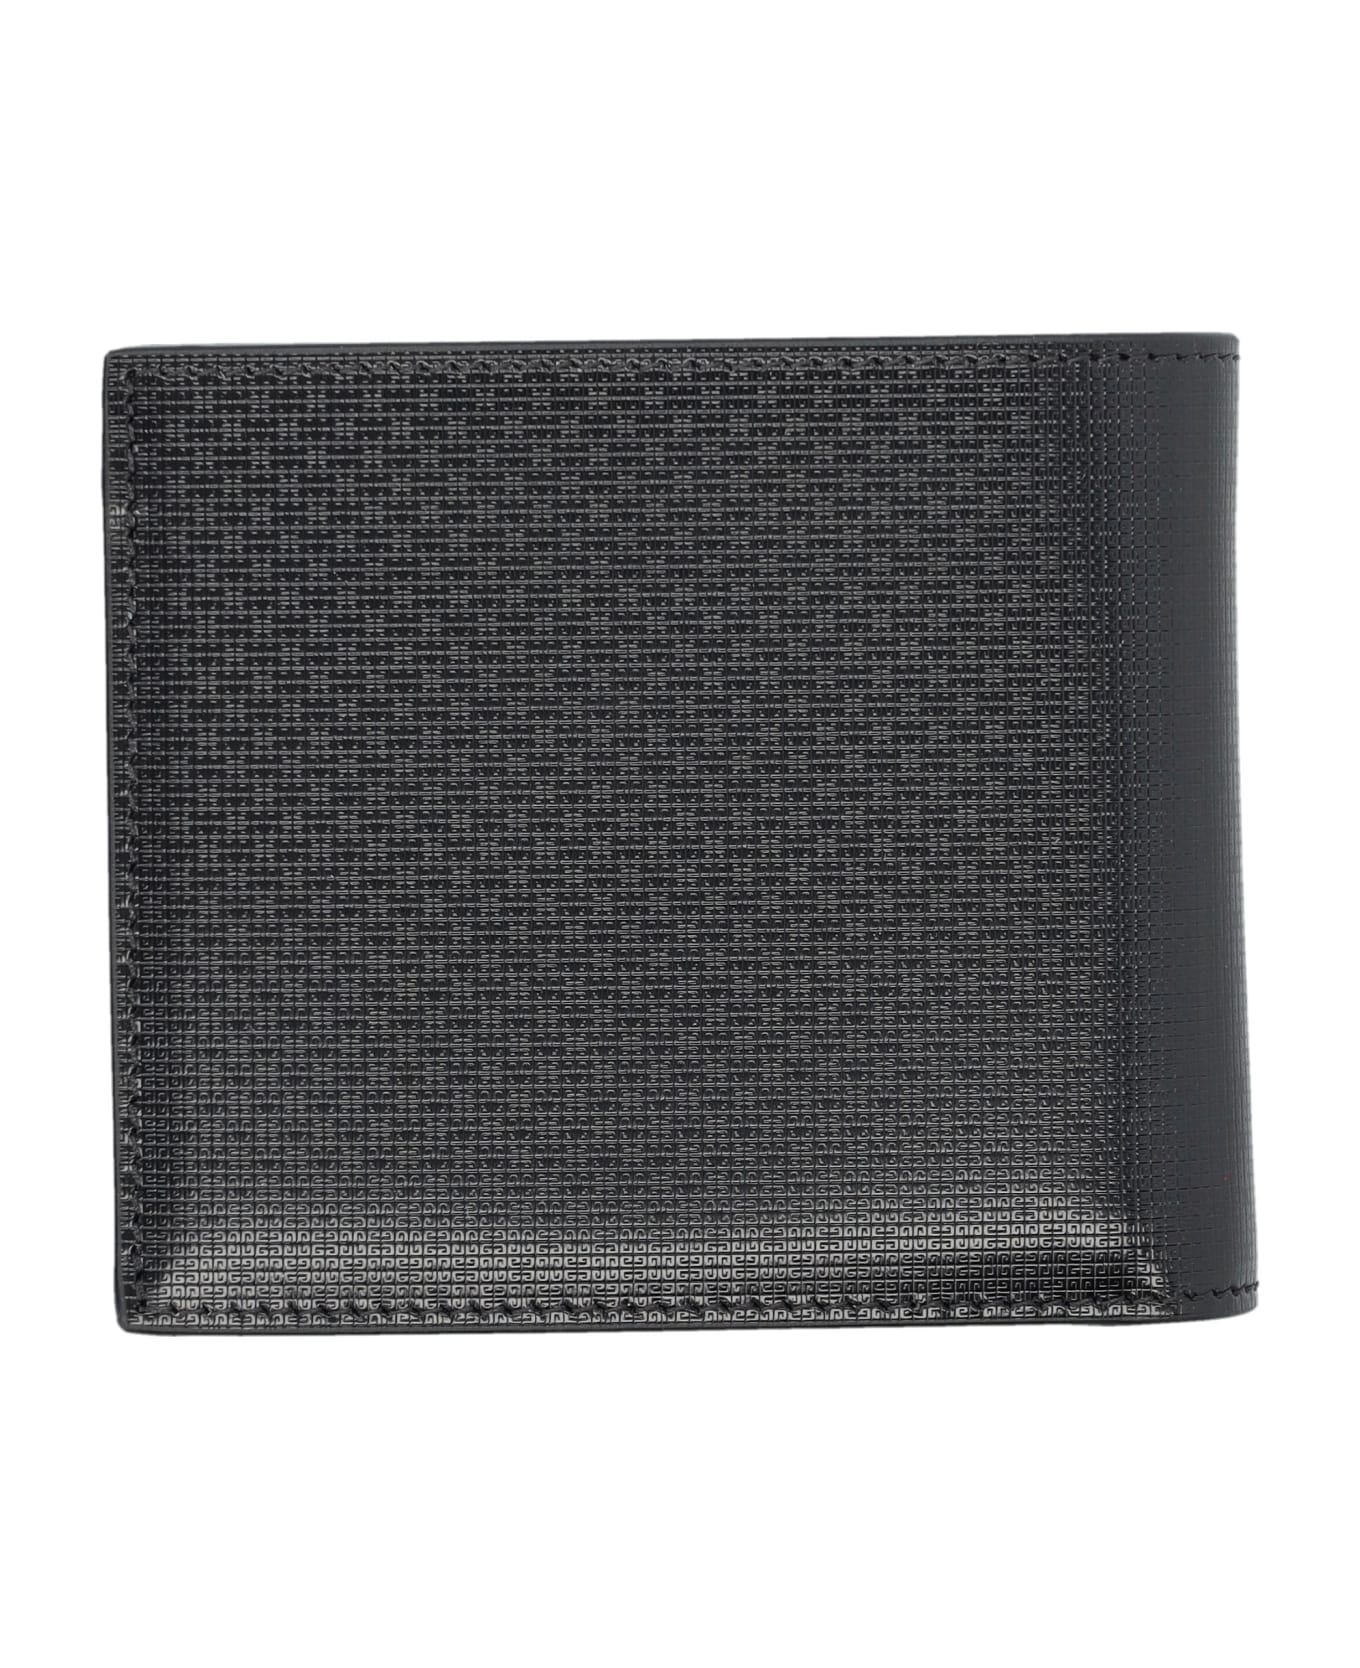 Givenchy 4cc Billfold Coin Wallet - BLACK 財布